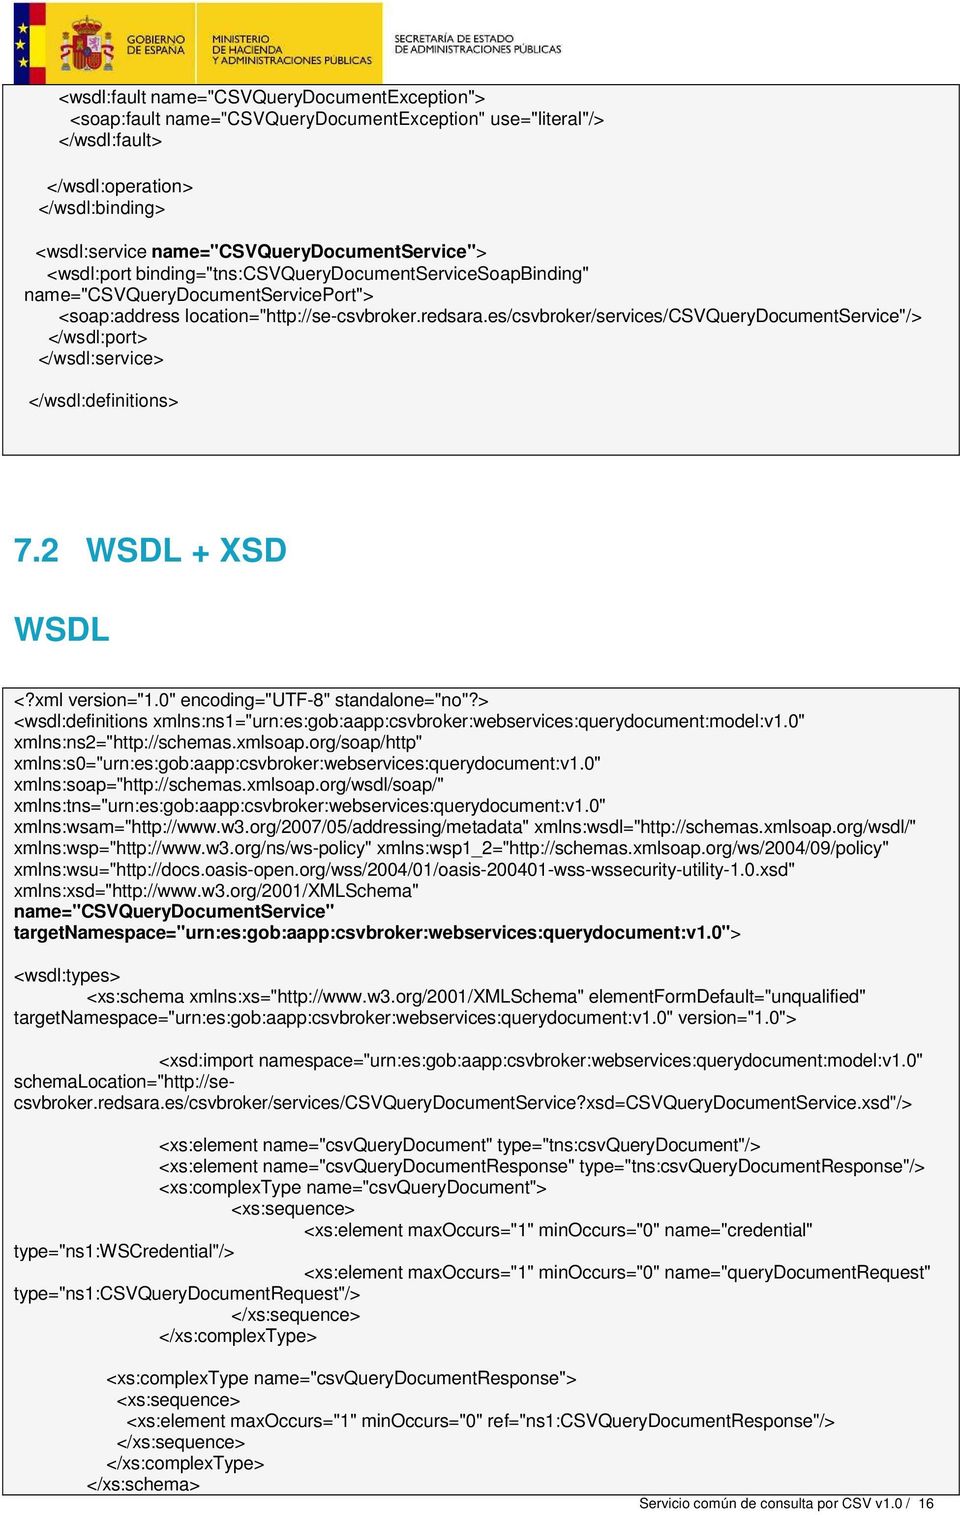 es/csvbroker/services/csvquerydocumentservice"/> </wsdl:port> </wsdl:service> </wsdl:definitions> 7.2 WSDL + XSD WSDL <?xml version="1.0" encoding="utf-8" standalone="no"?